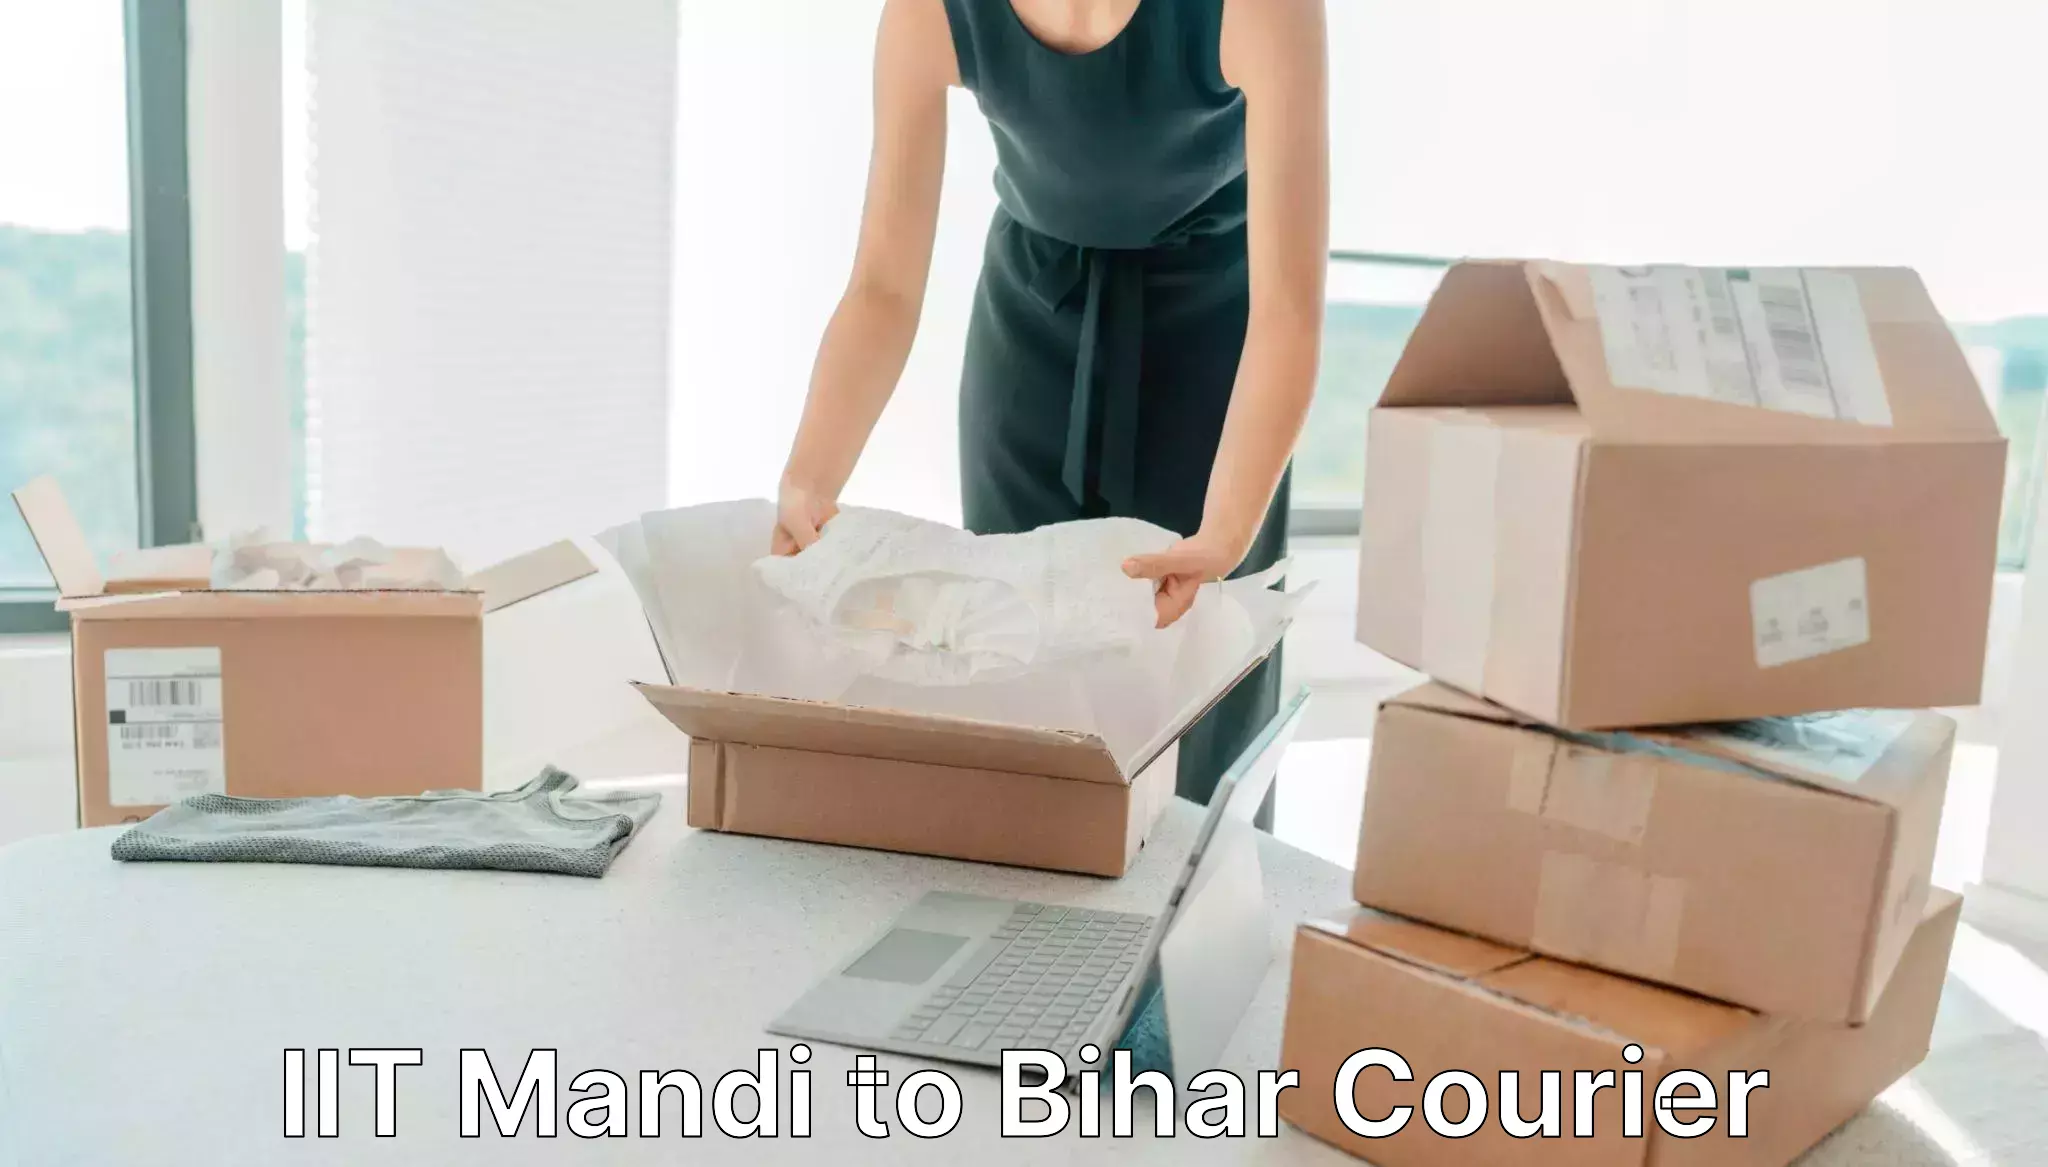 Business delivery service IIT Mandi to Bihar